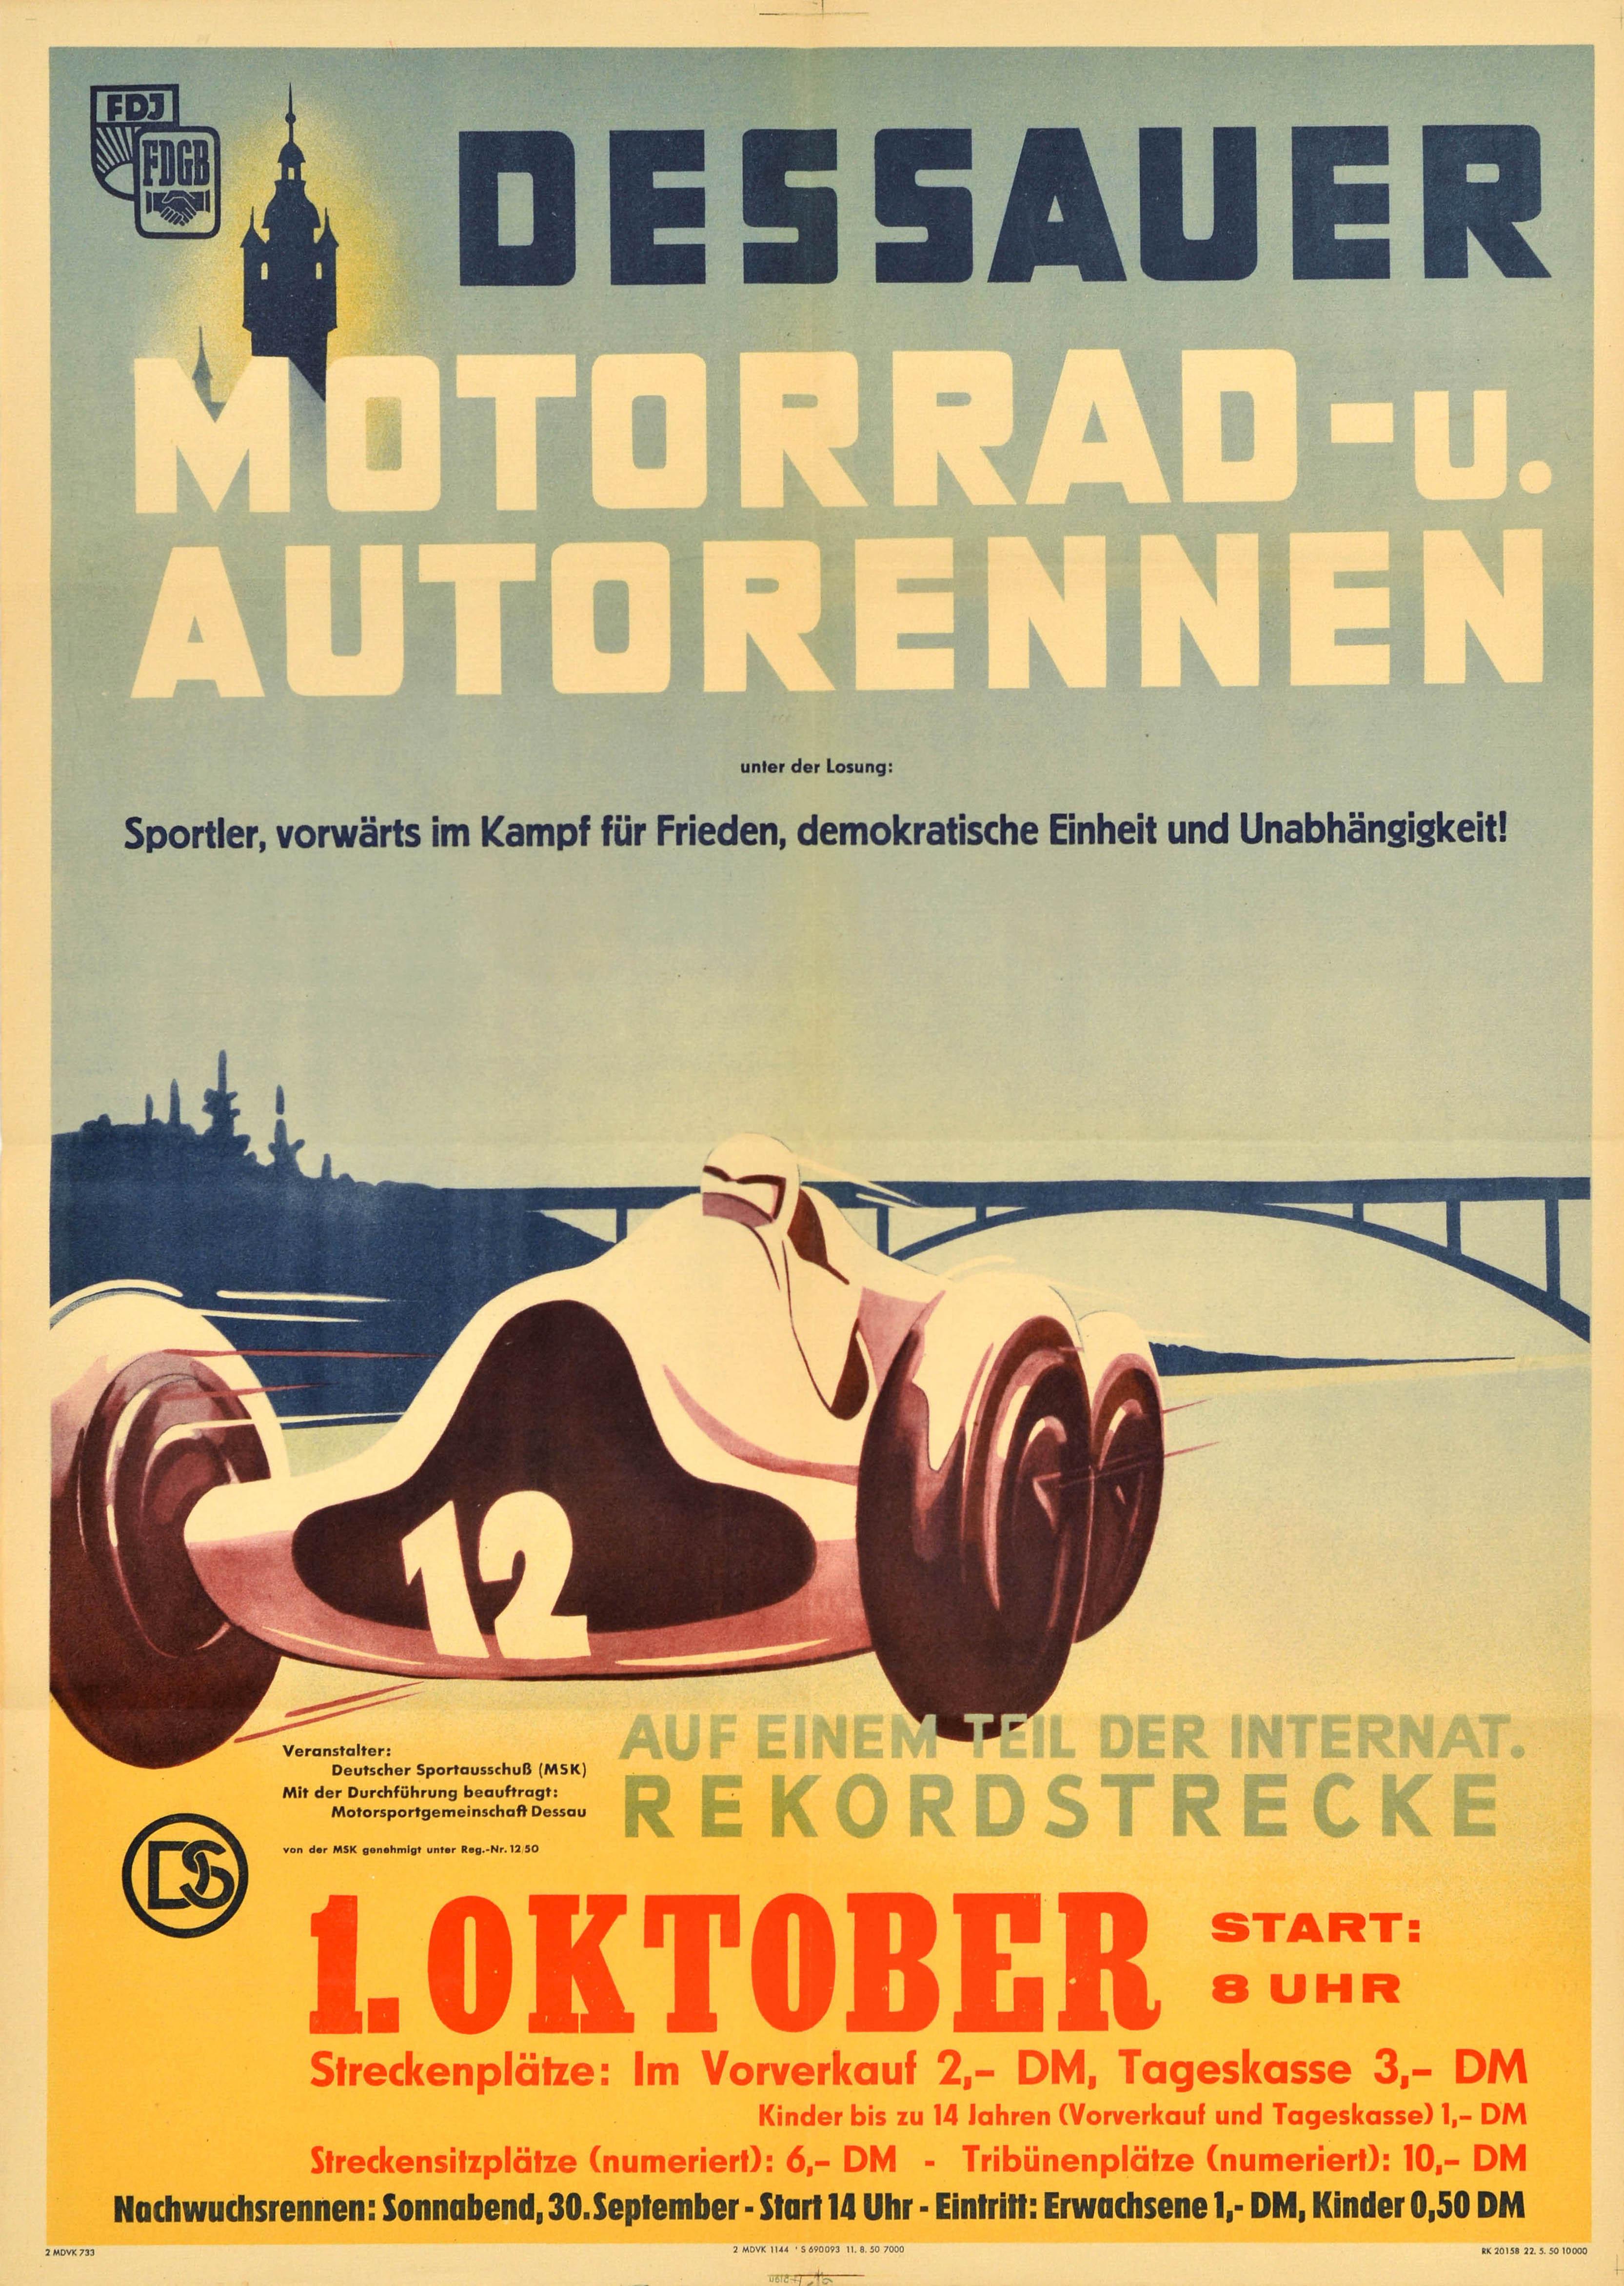 Unknown Print - Original Vintage Motorsport Poster Dessau Motorcycle Car Race Germany Midcentury